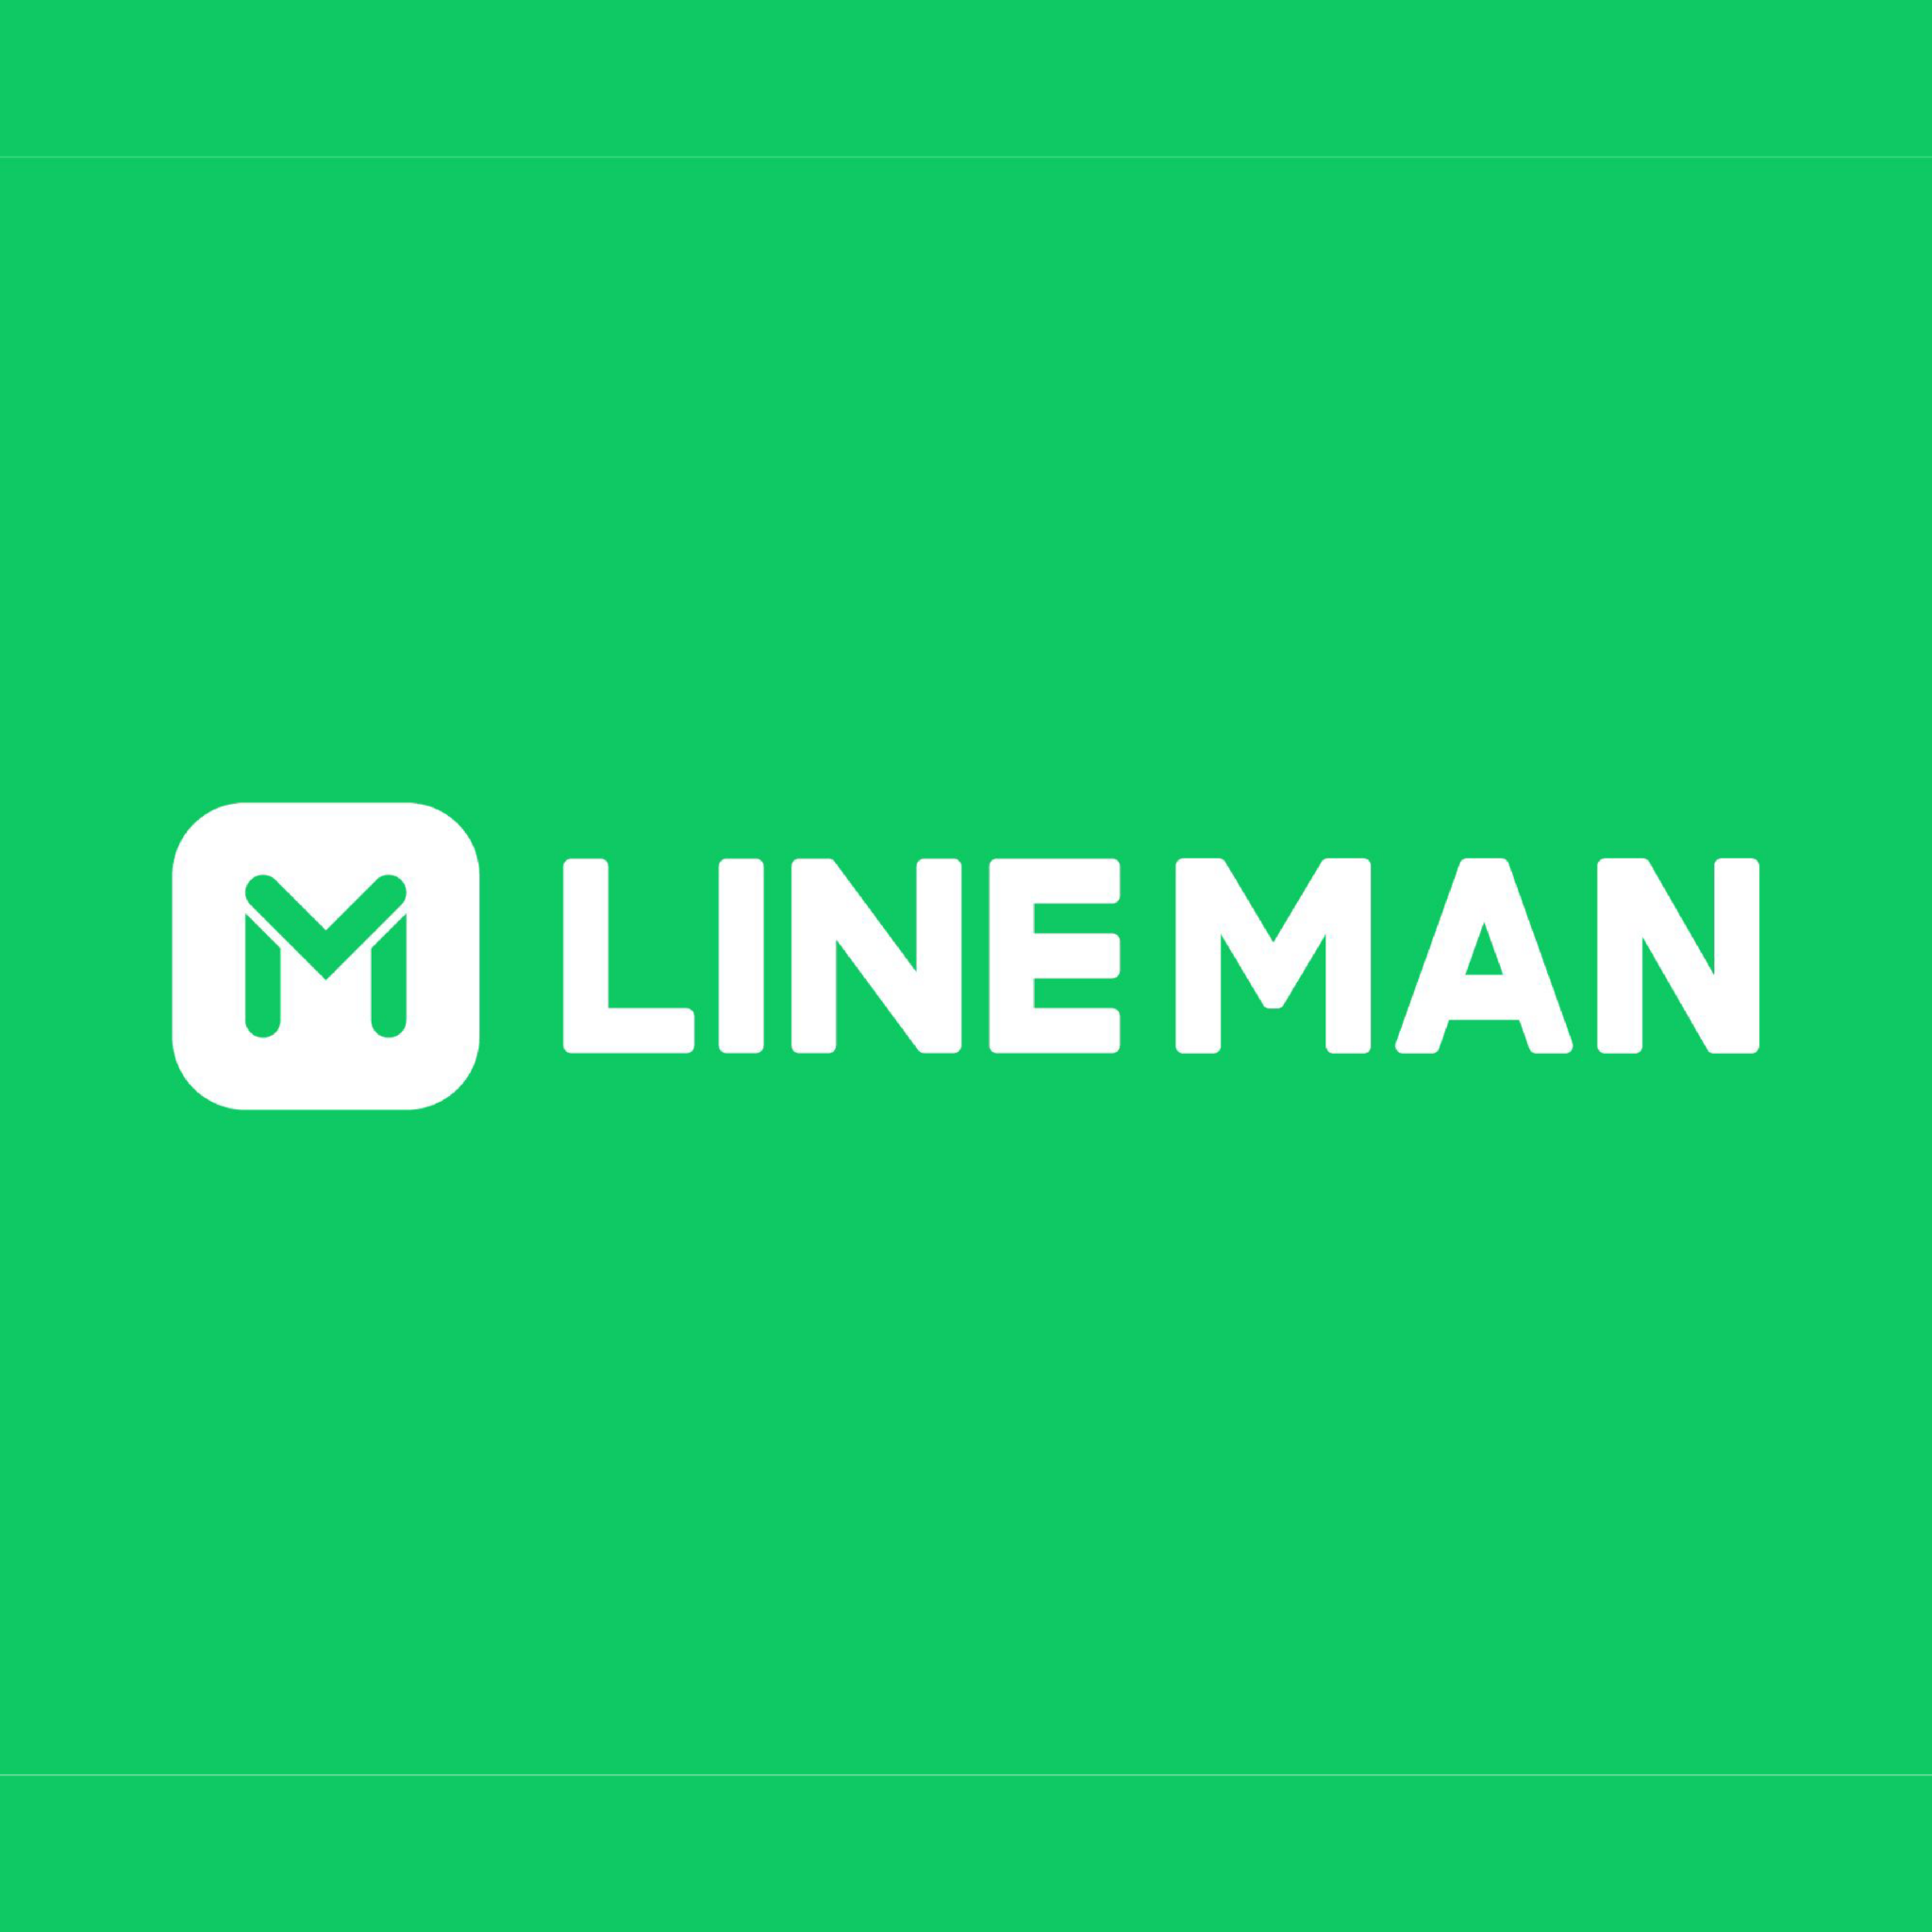 LineMan-01